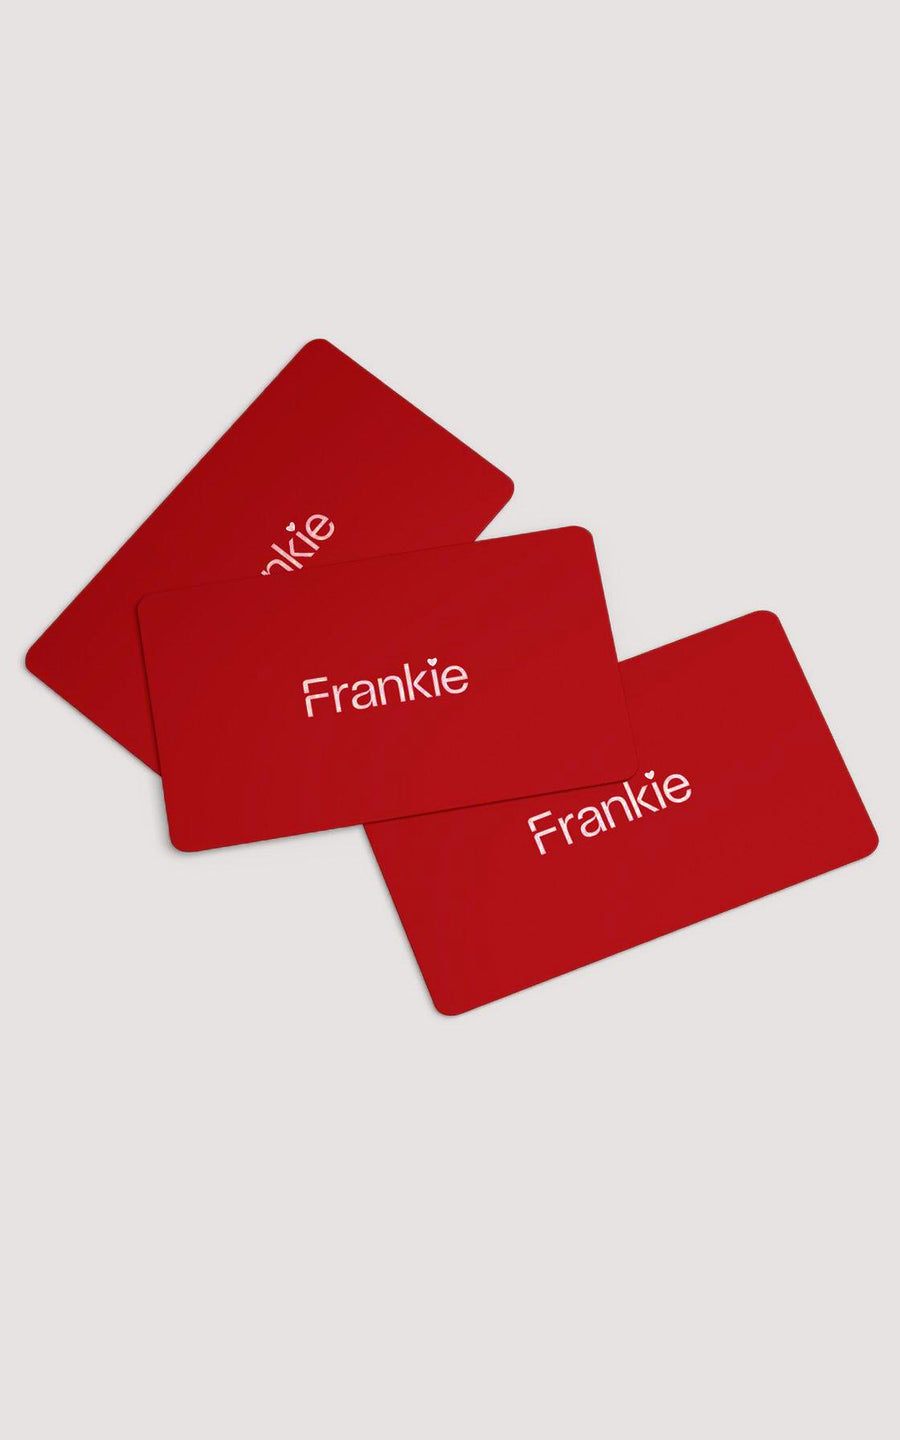 Frankie Gift Card